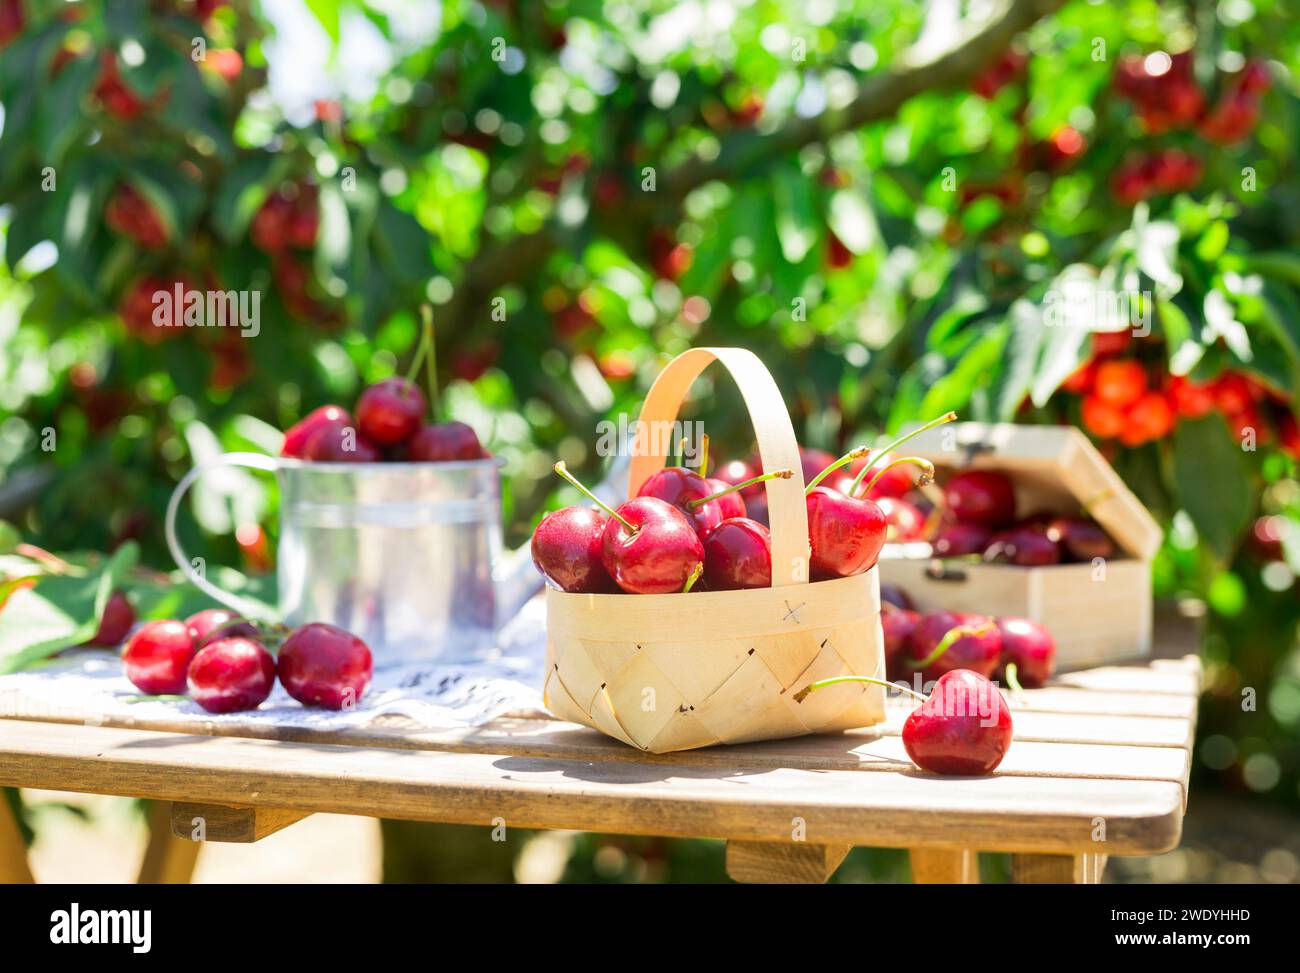 Still life of cherries on table in garden Stock Photo